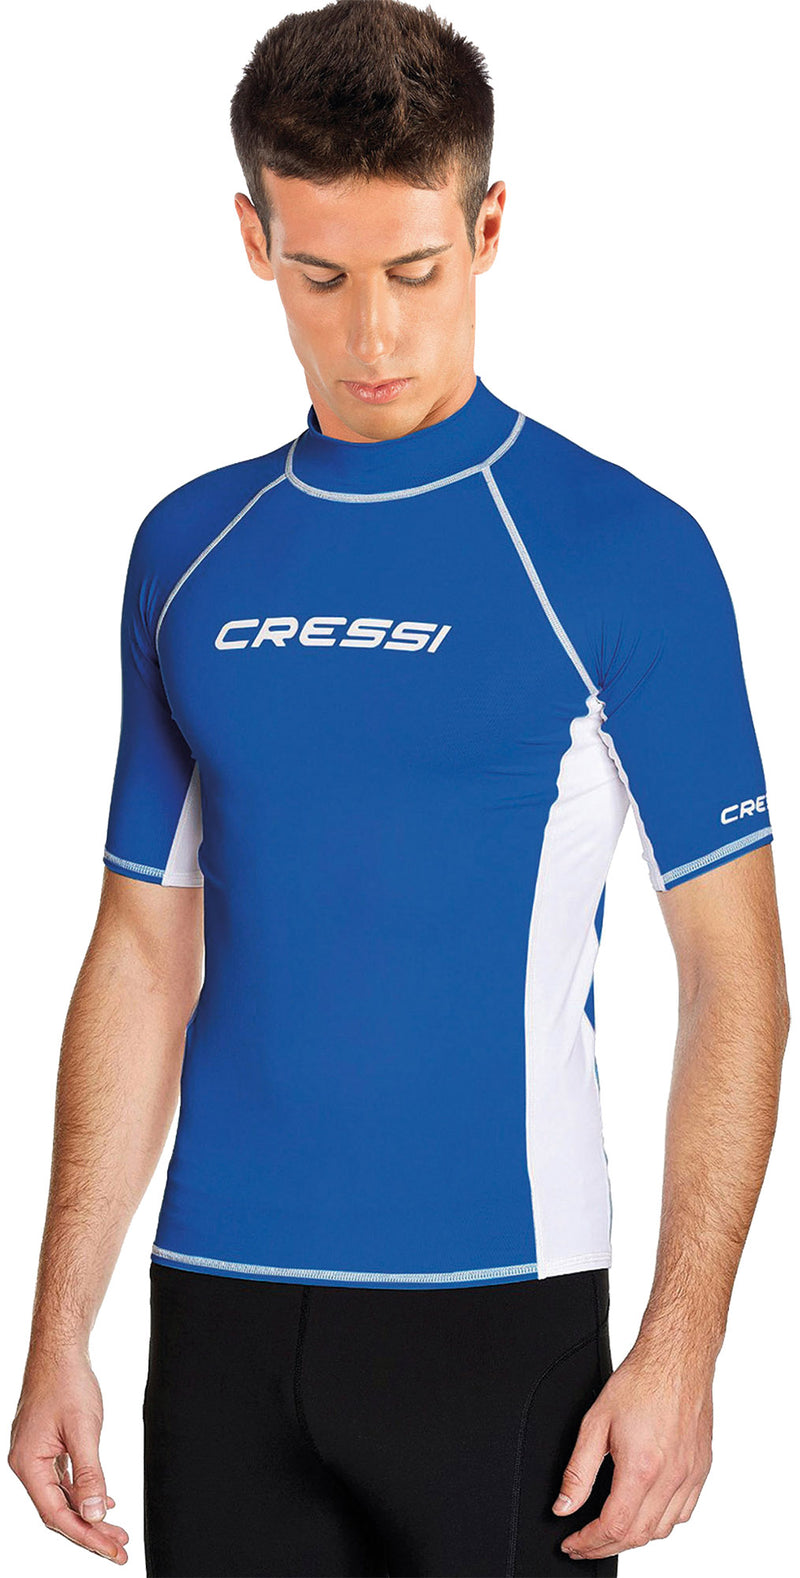 Cressi Rashguard Shirt Man spiaggia protezion protettiv snorkeling & beach paddling protect rashguard short long sleeve shirt man